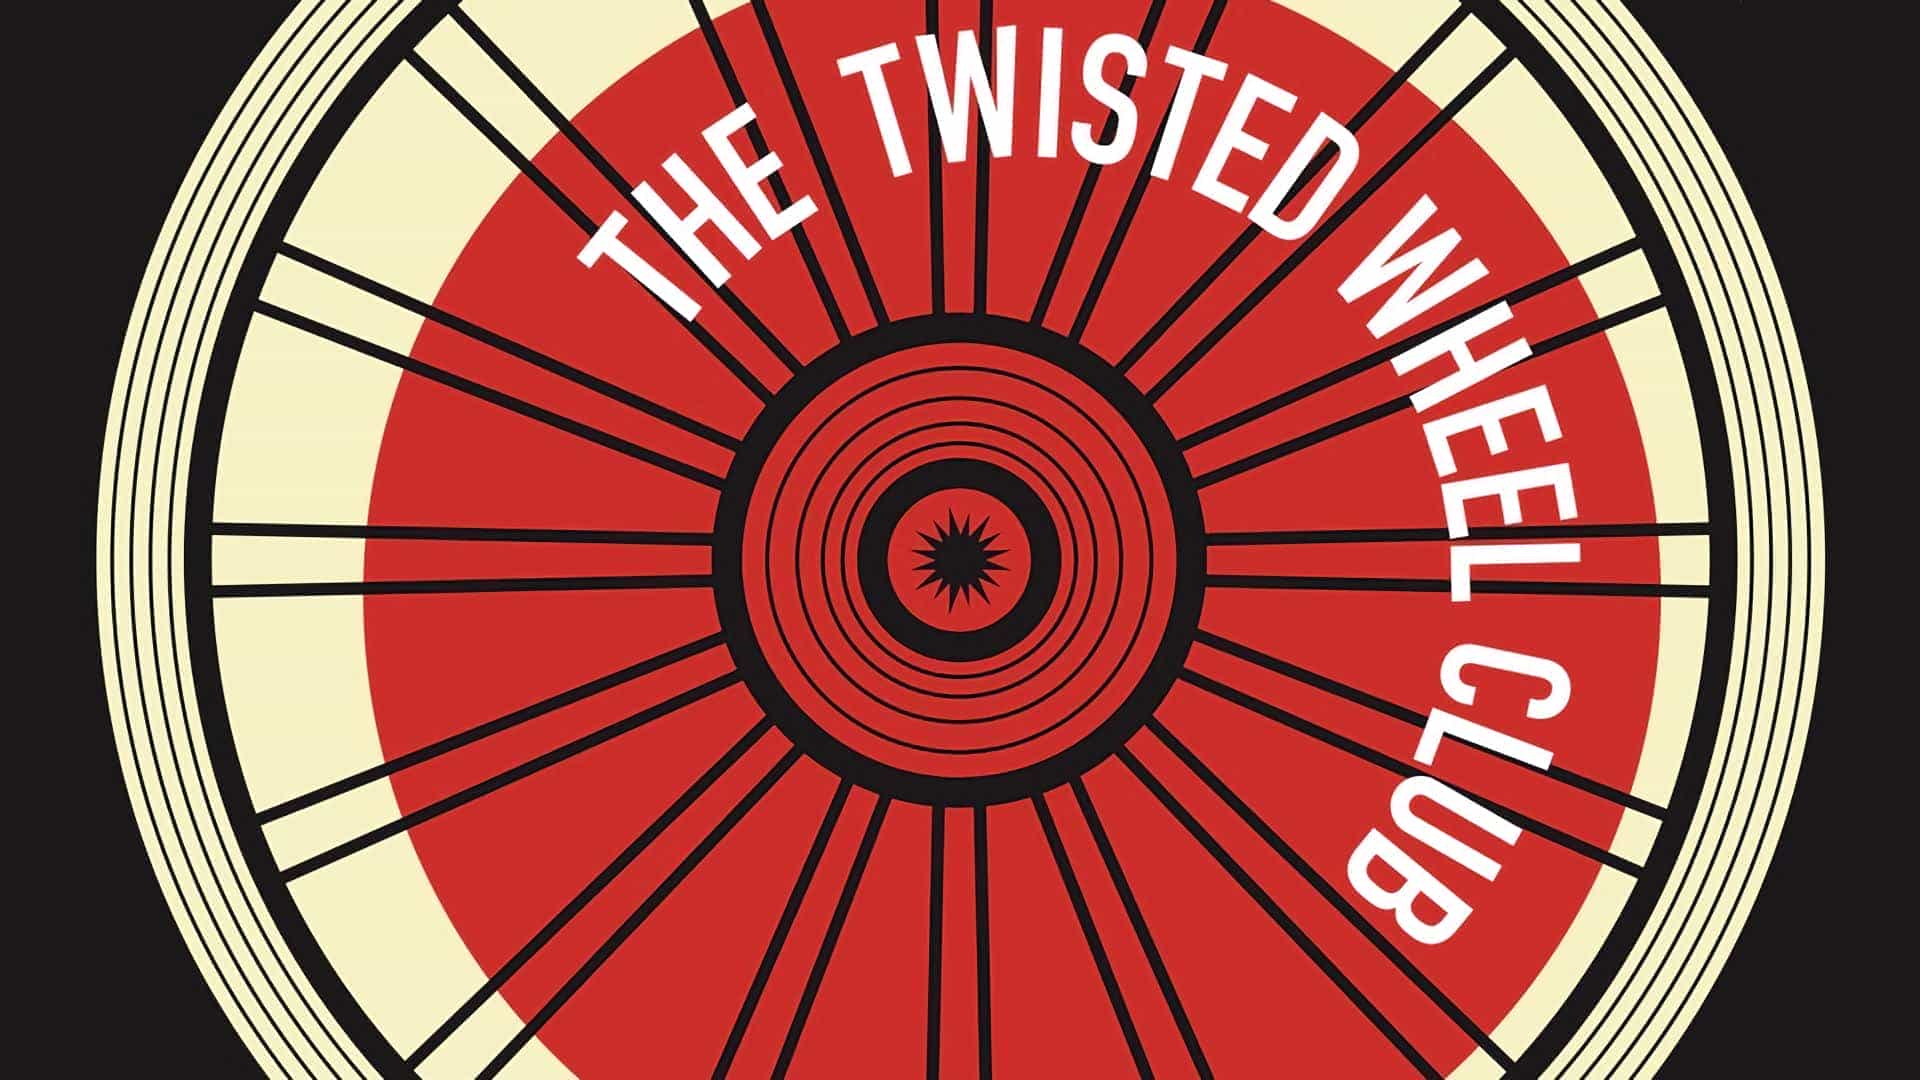 The Twisted Wheel Club